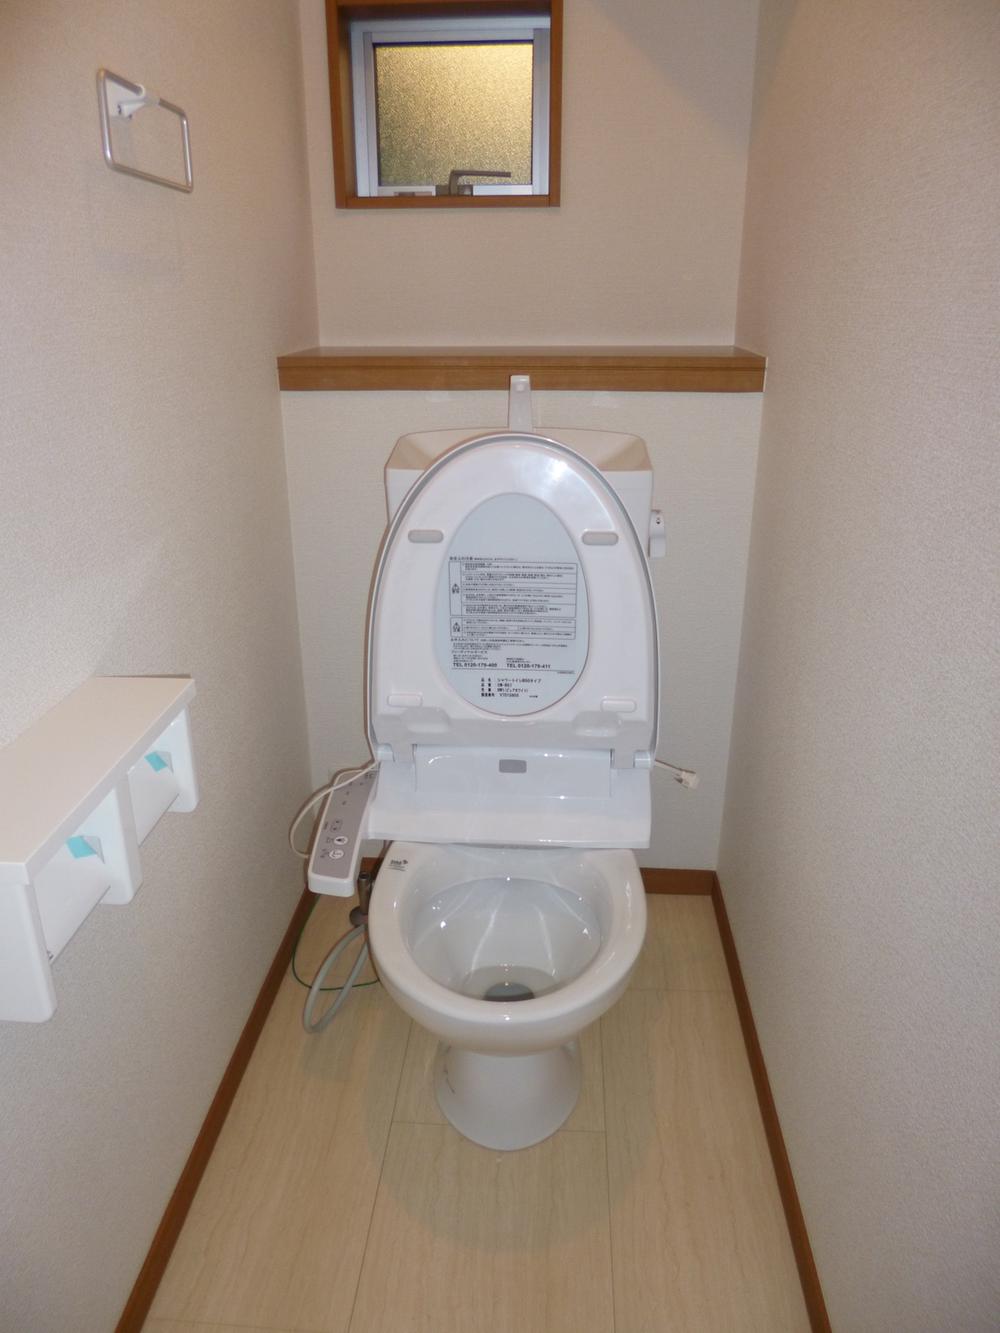 Toilet. (2013.11.29 shooting)